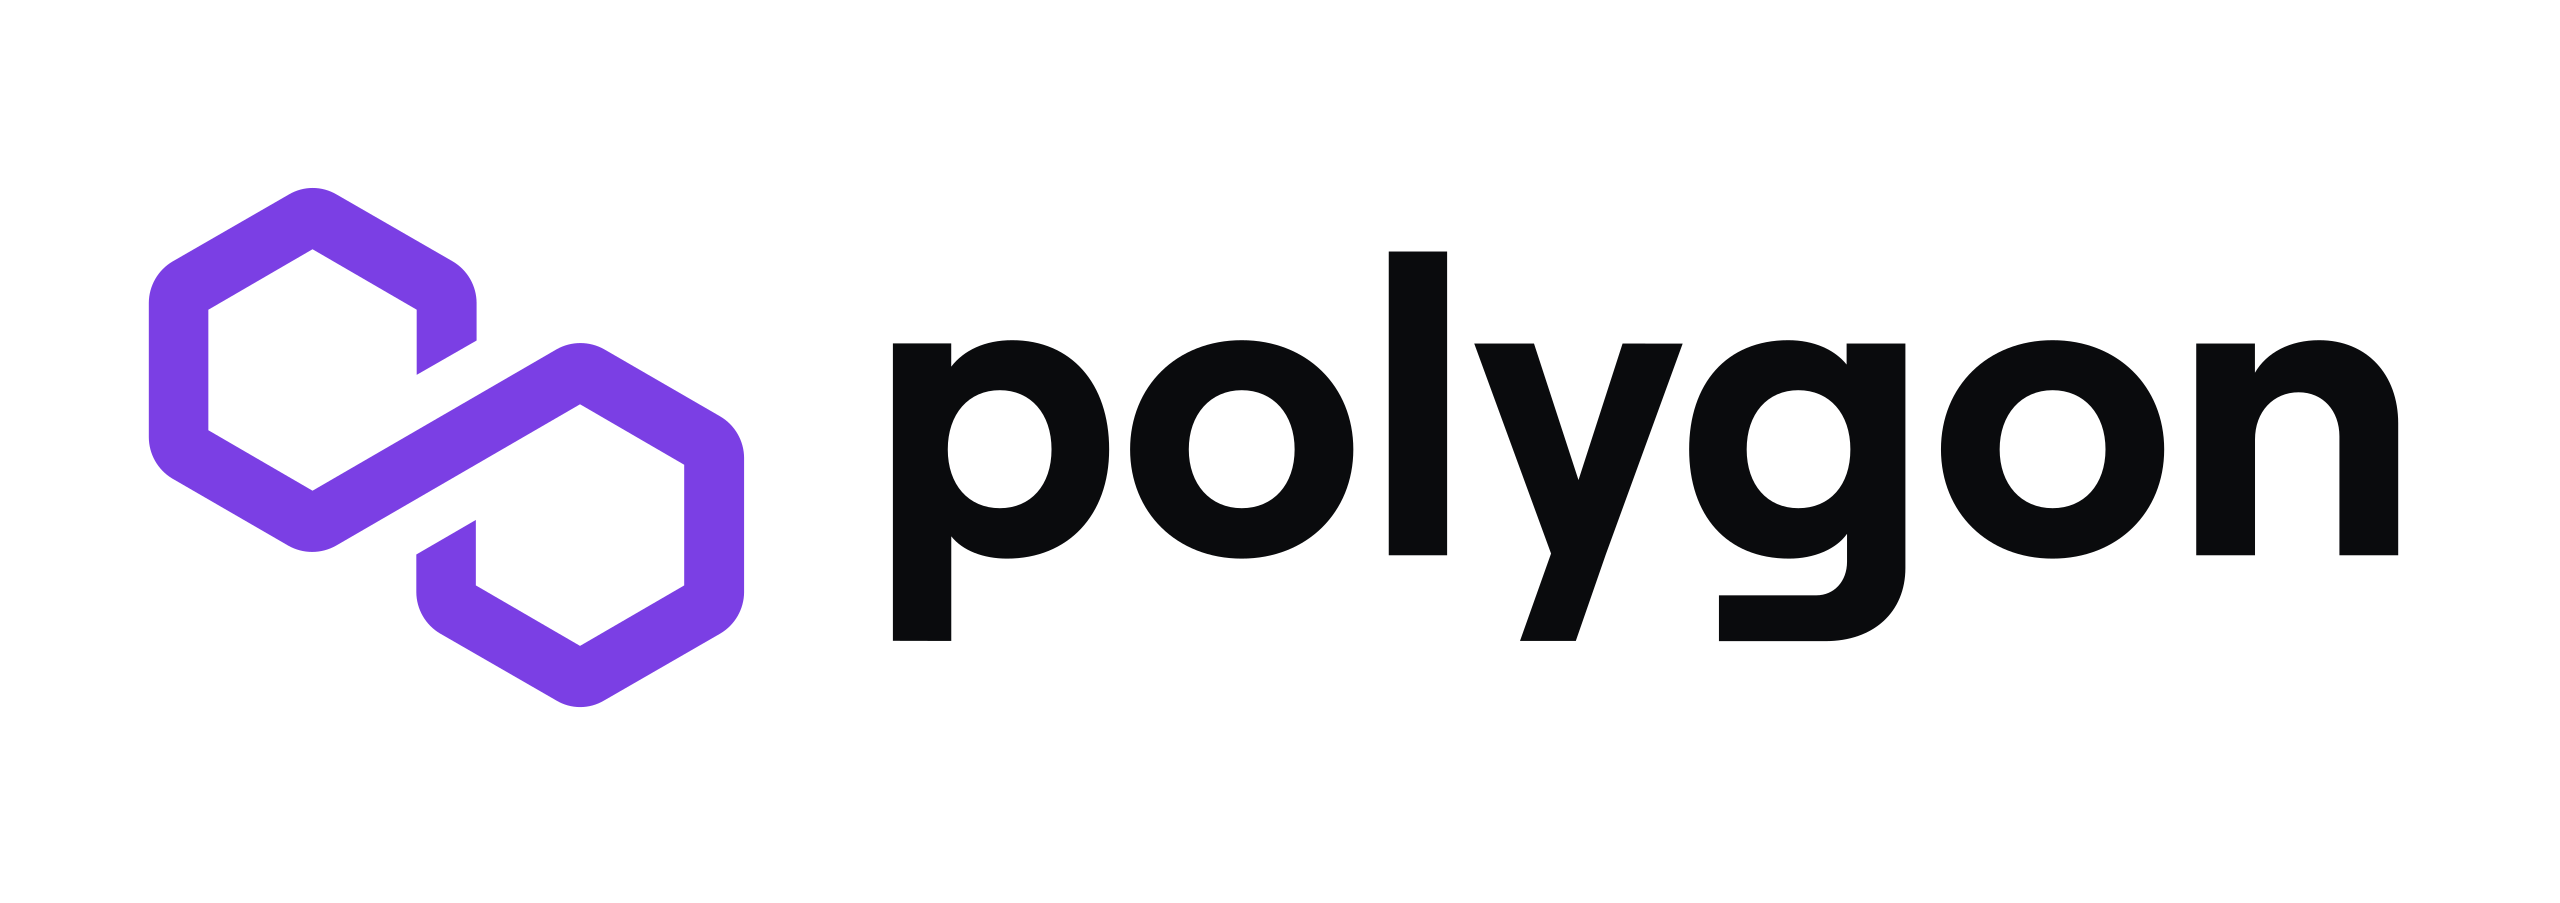 Polygon_blockchain_logo.png